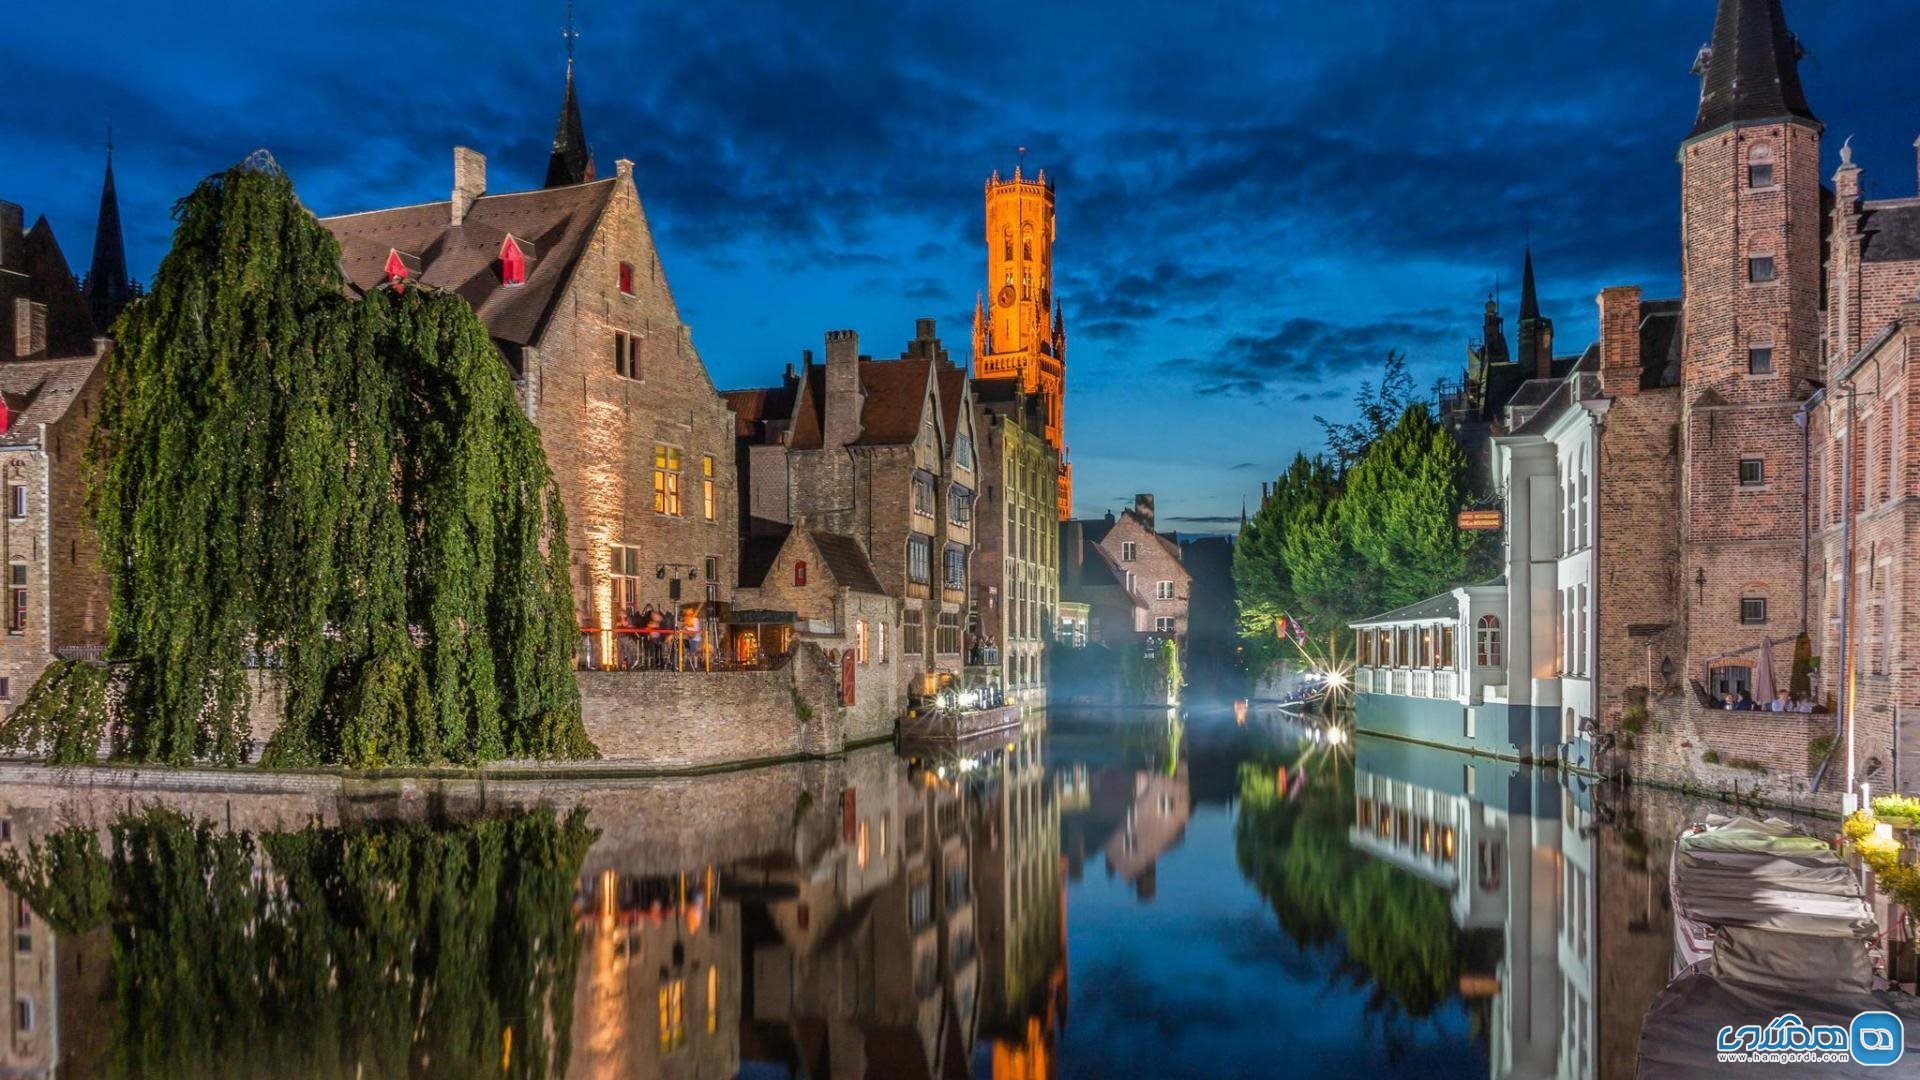  Canals of Bruges